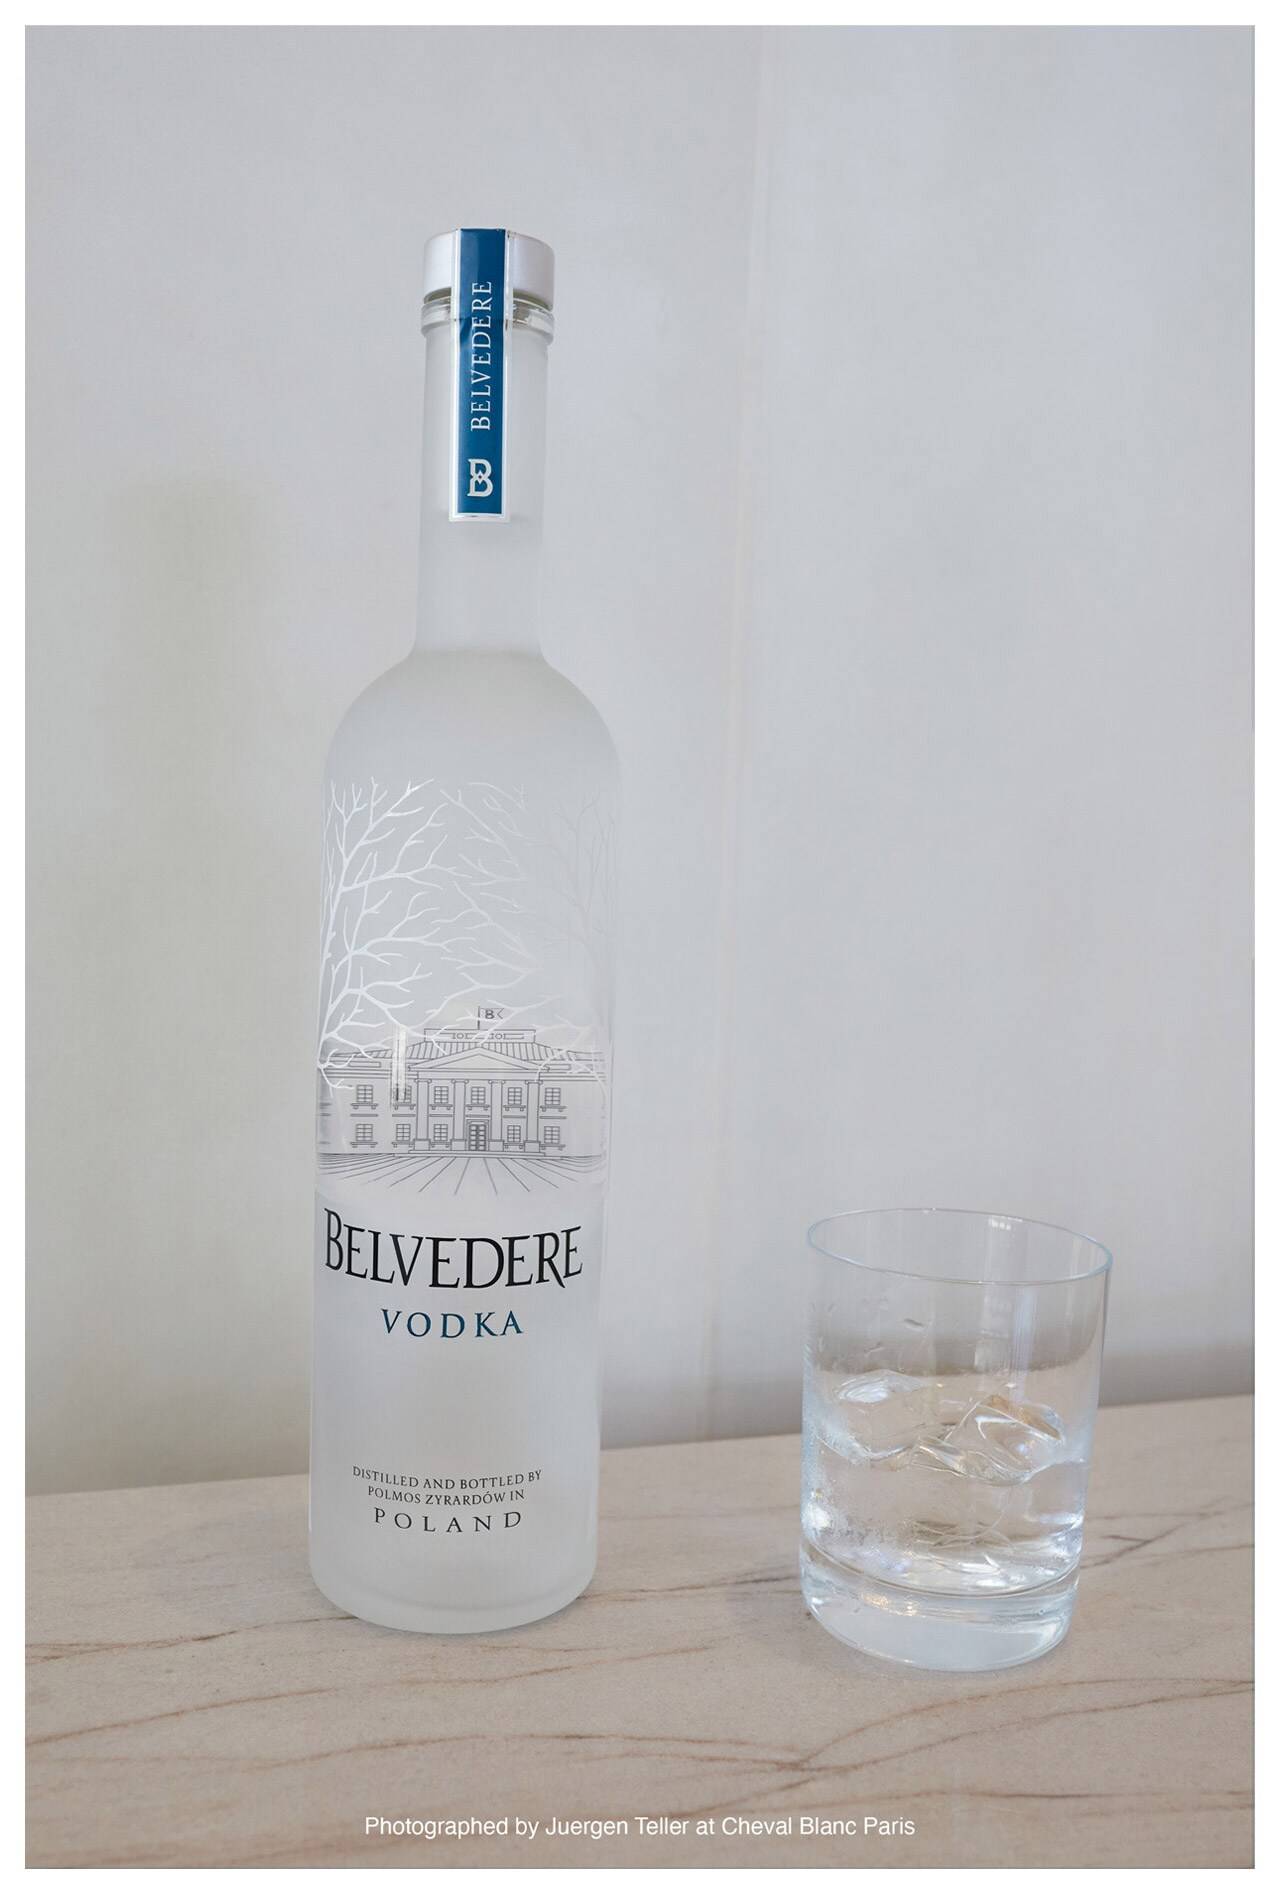 A bottle of Belvedere